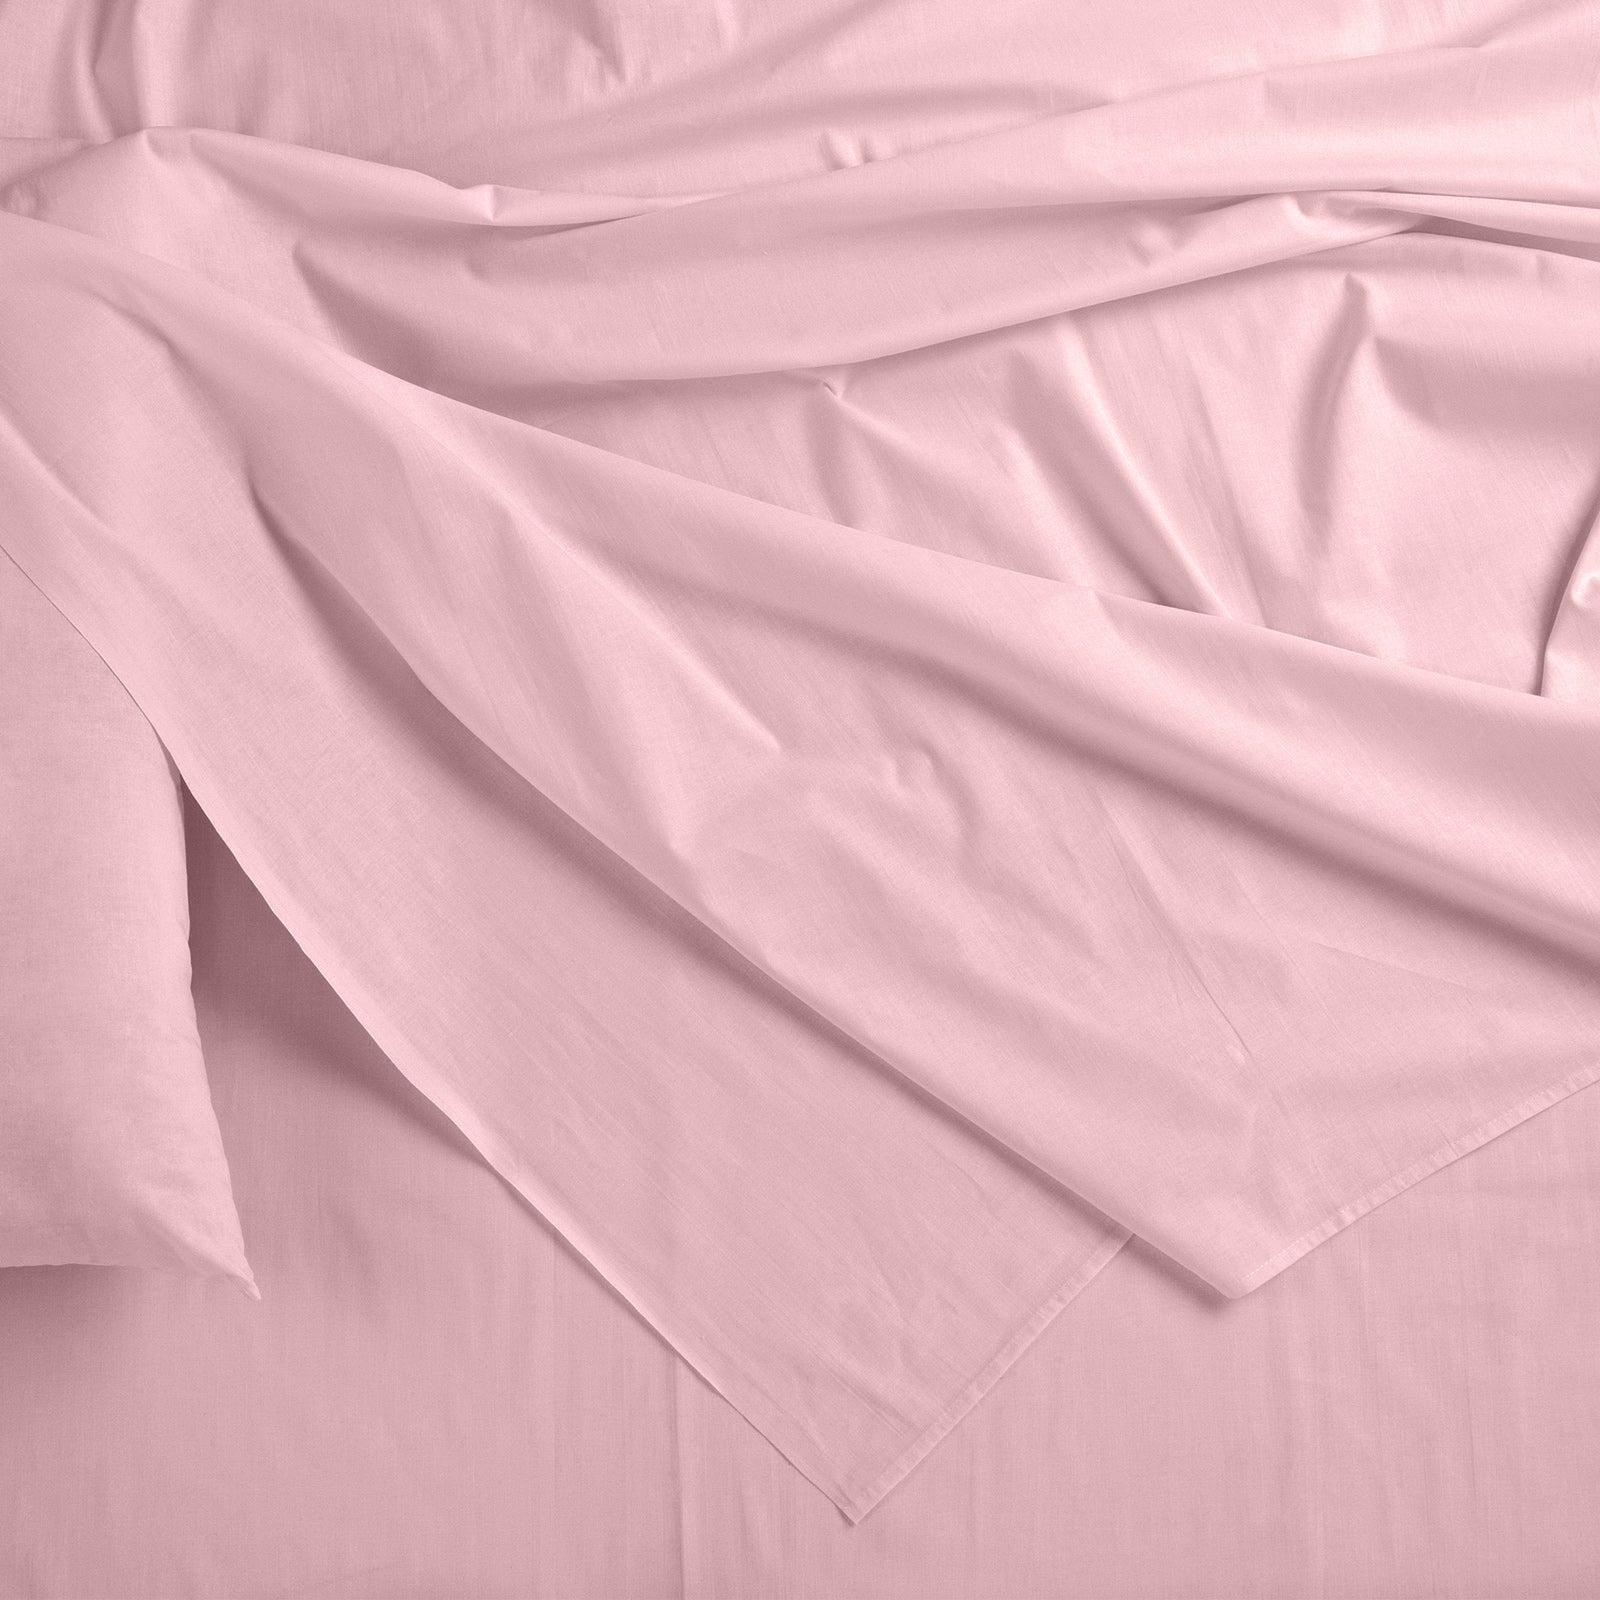 Royal Comfort Bamboo Blended Sheet & Pillowcases Set 1000TC Ultra Soft Bedding King Bubble Bath Deals499